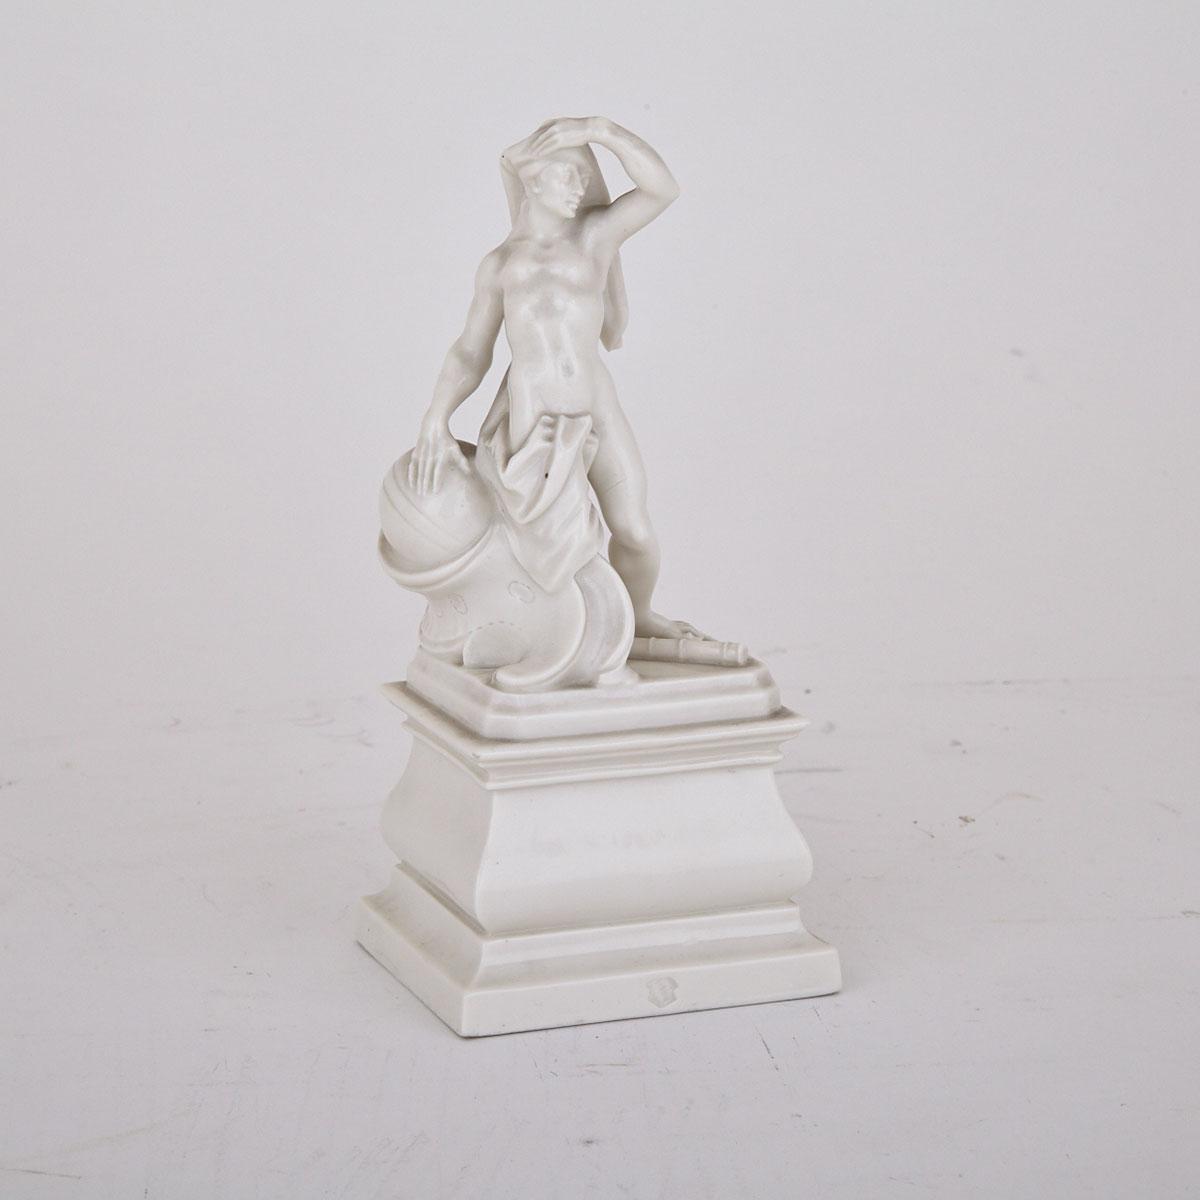 Nymphenburg White Glazed Figure, 20th century